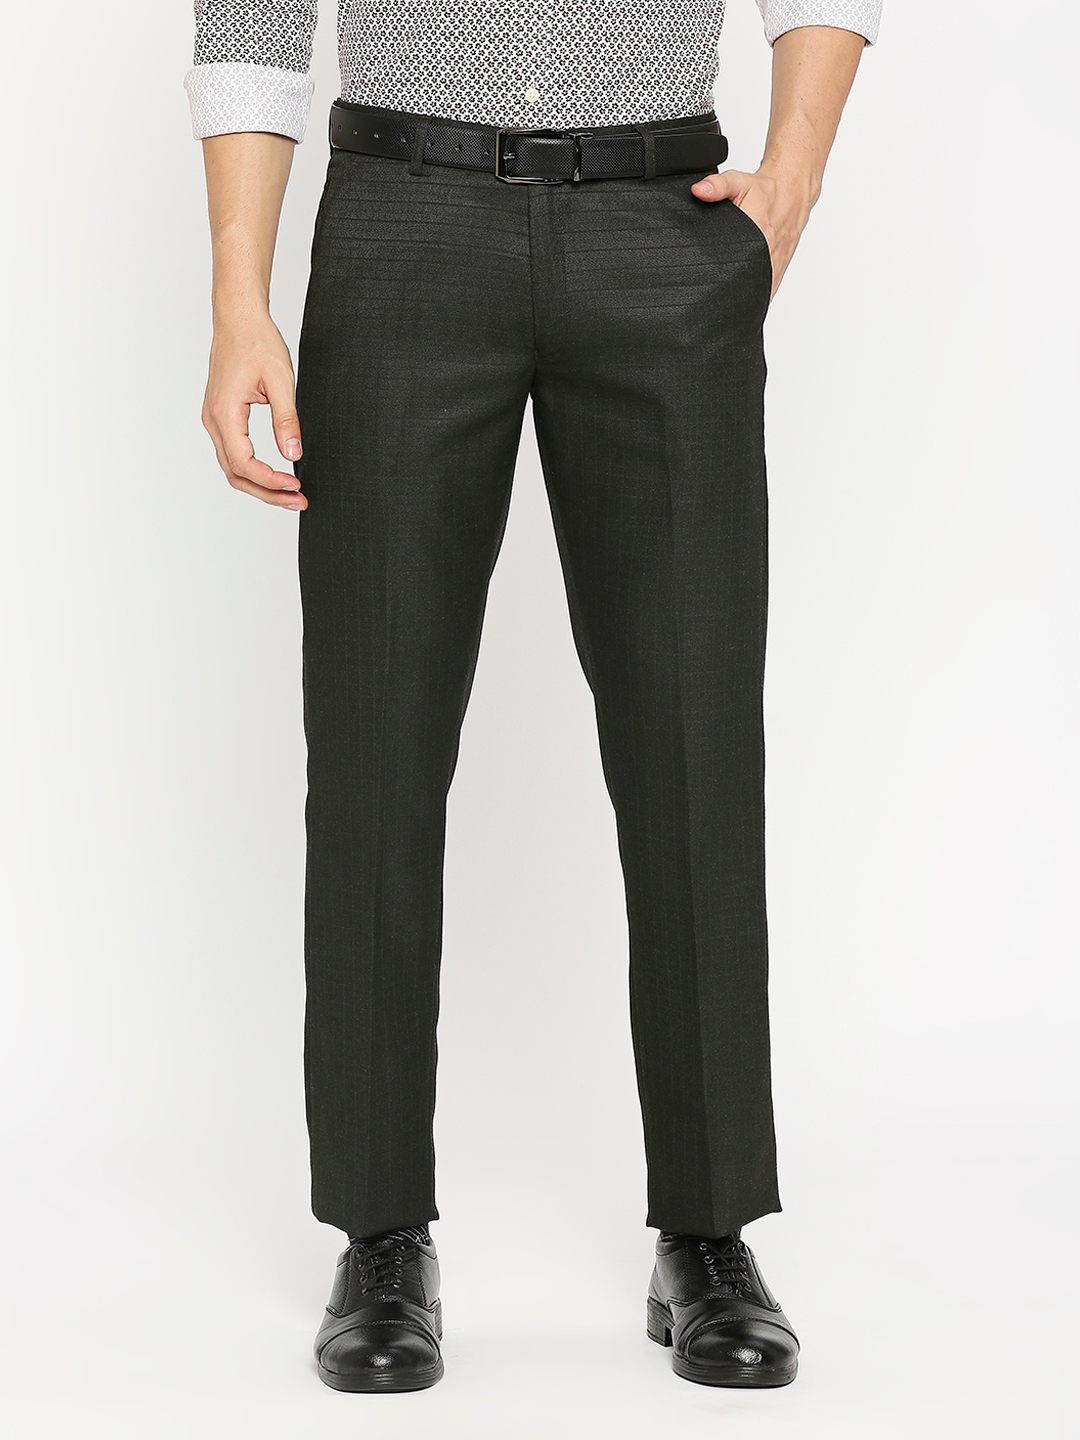 Shotarr Mens Slim Fit Navy Formal Trouser for Men and Boys  Polyester  Viscose Bottom Formal Pants